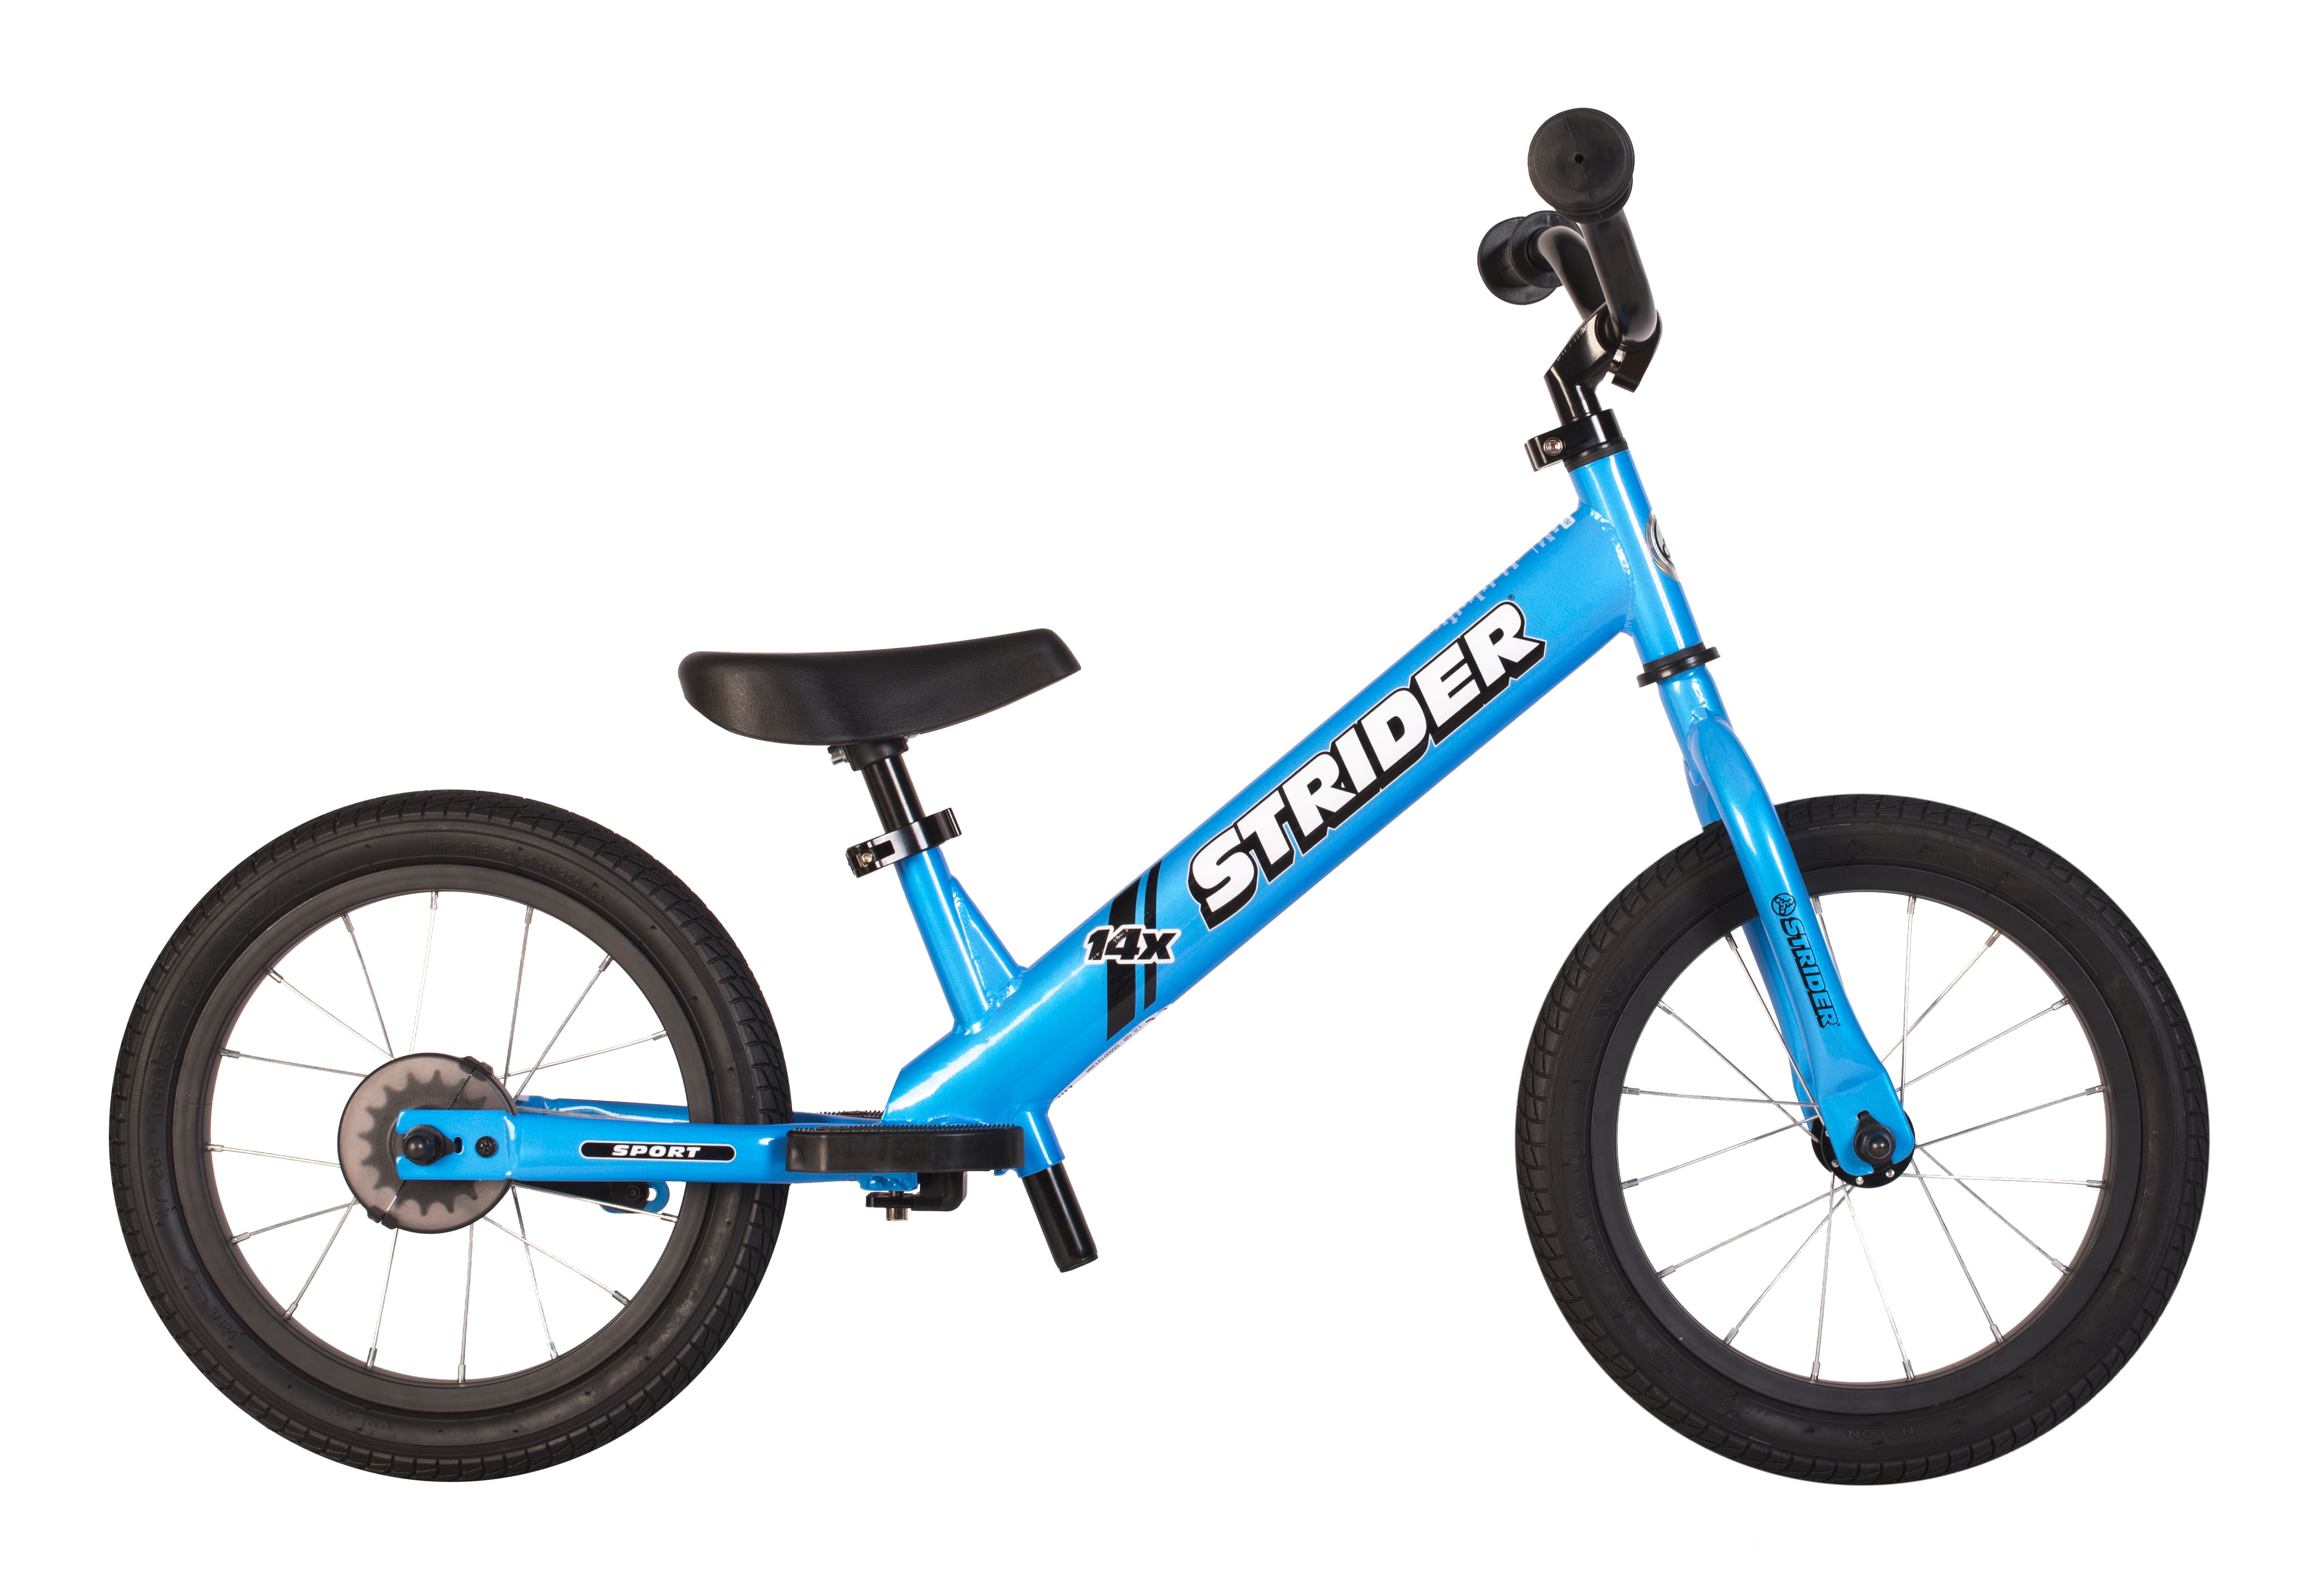 Strider - 14x Sport Balance Bike - Pedal Conversion Kit Sold Separately